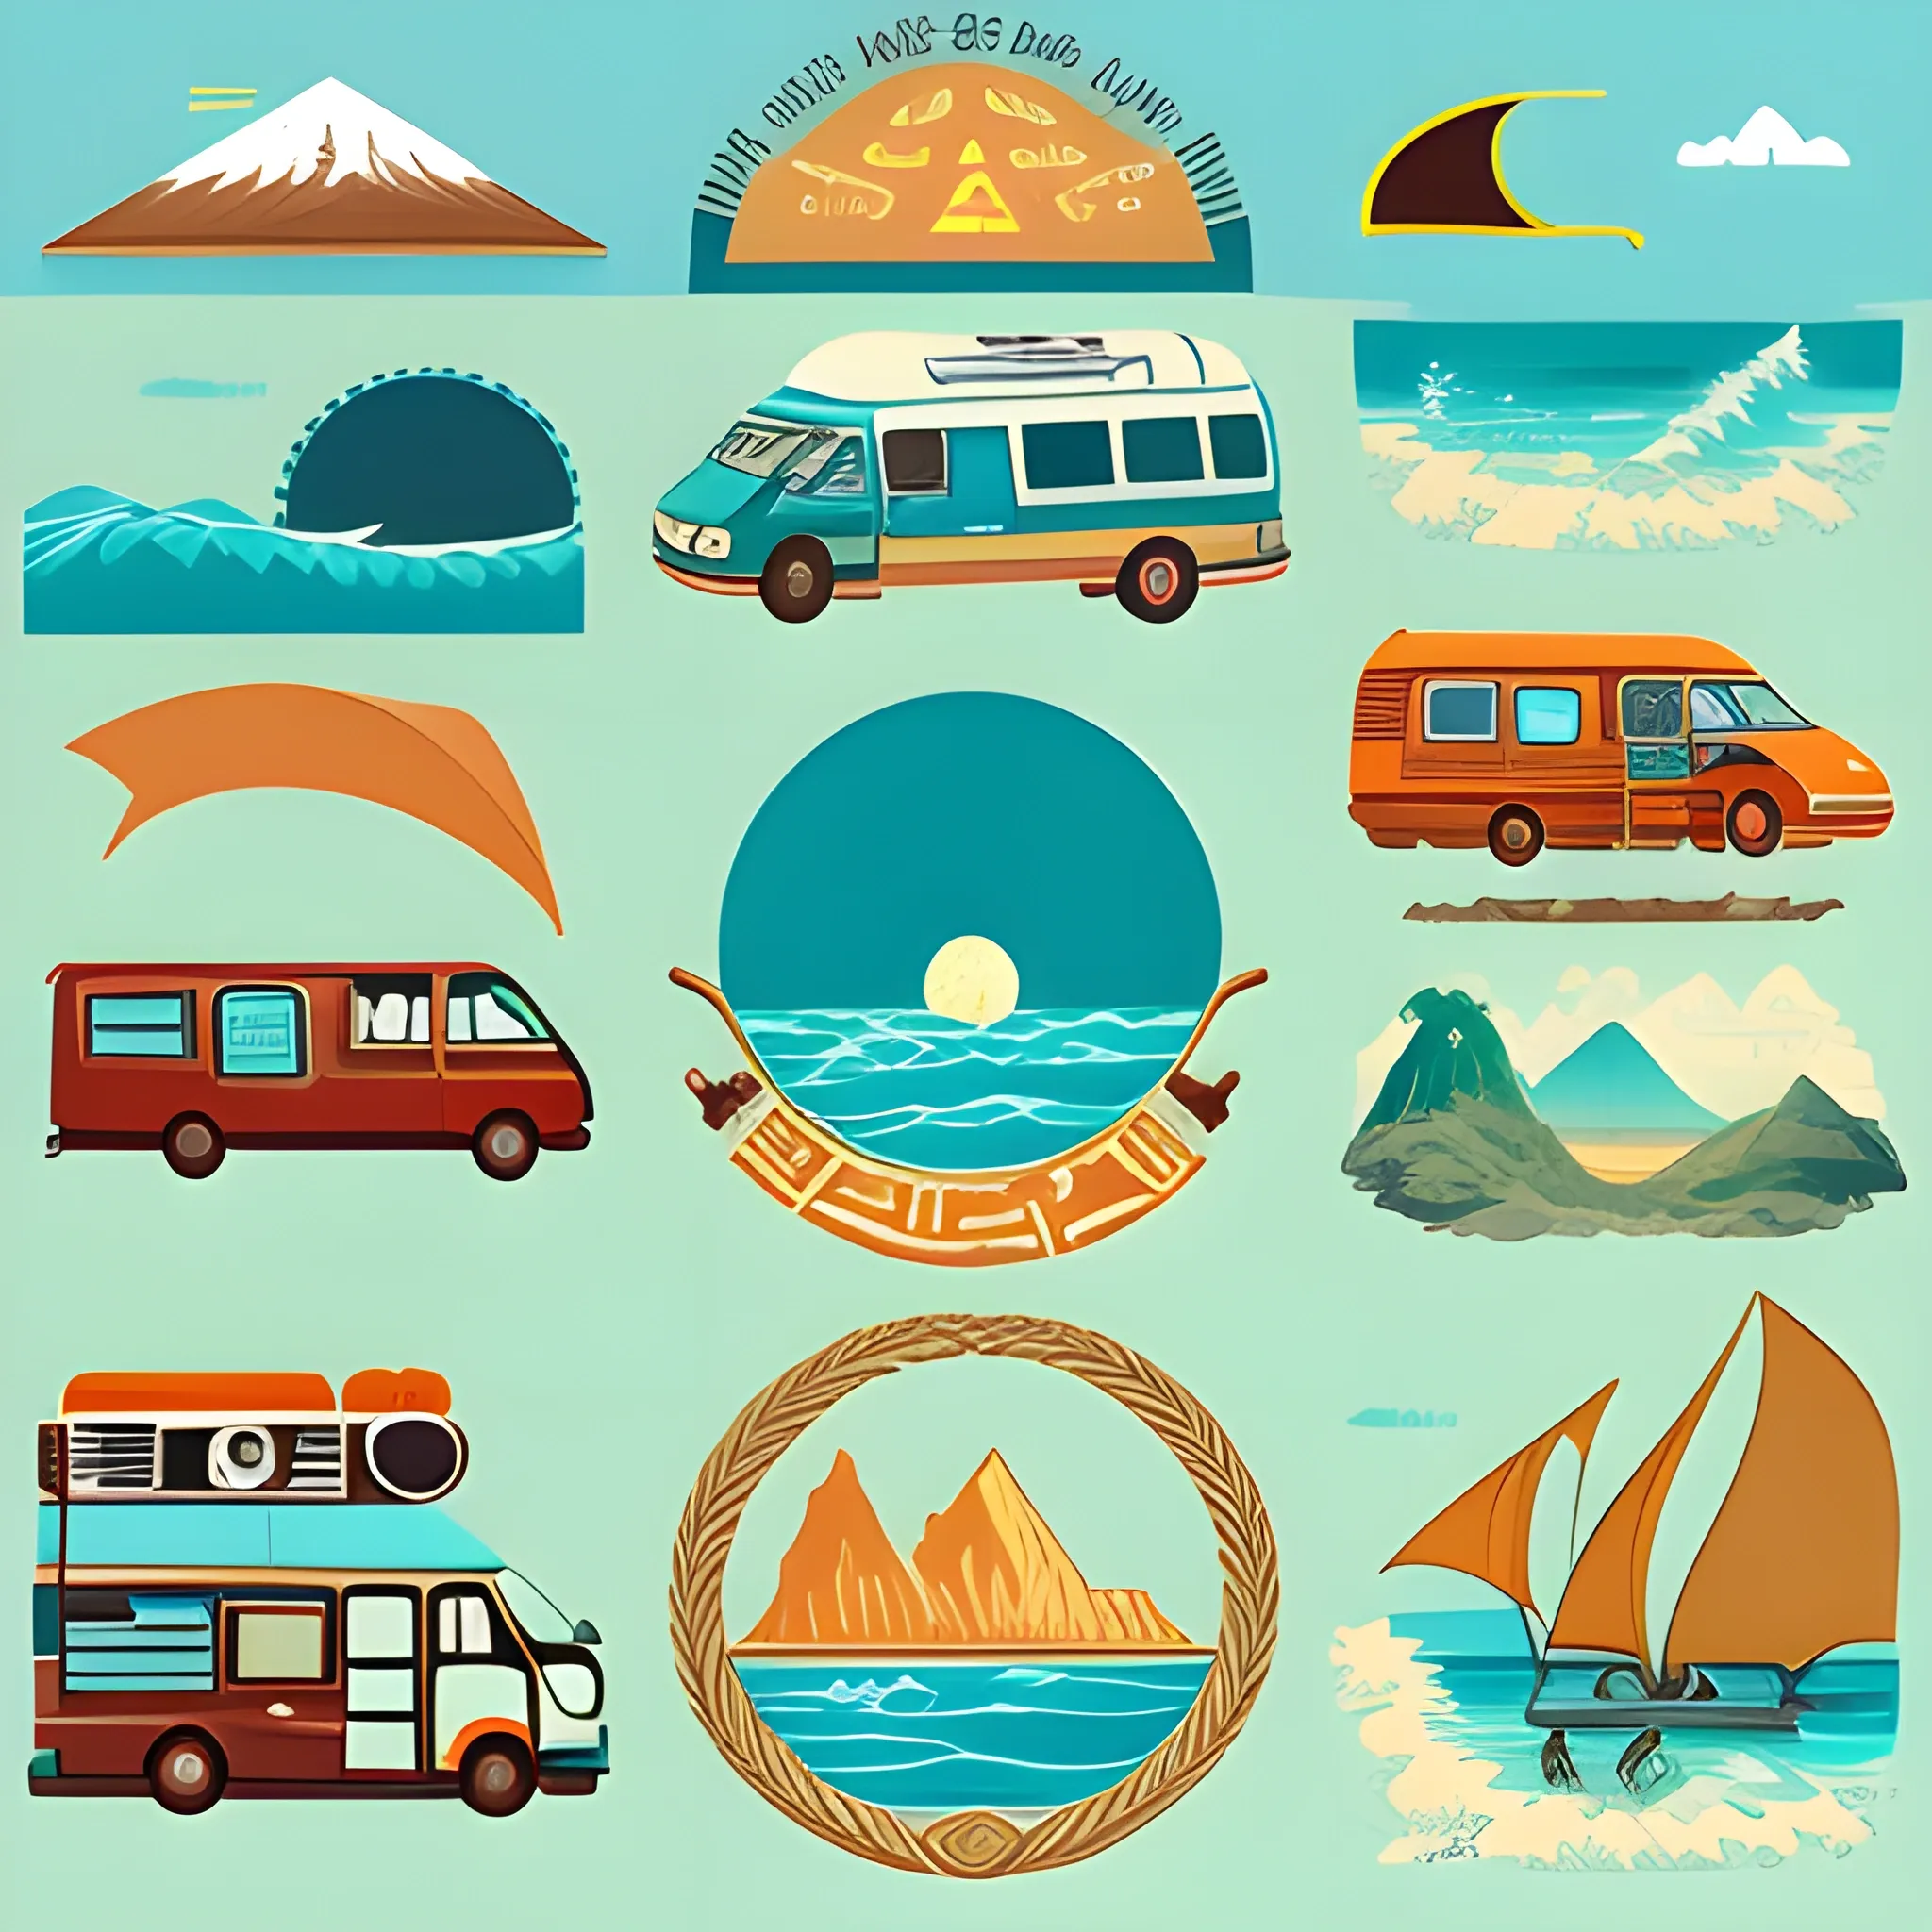 create hieroglyphs to represent van travel, adventure, ocean, waves, camping, travel
